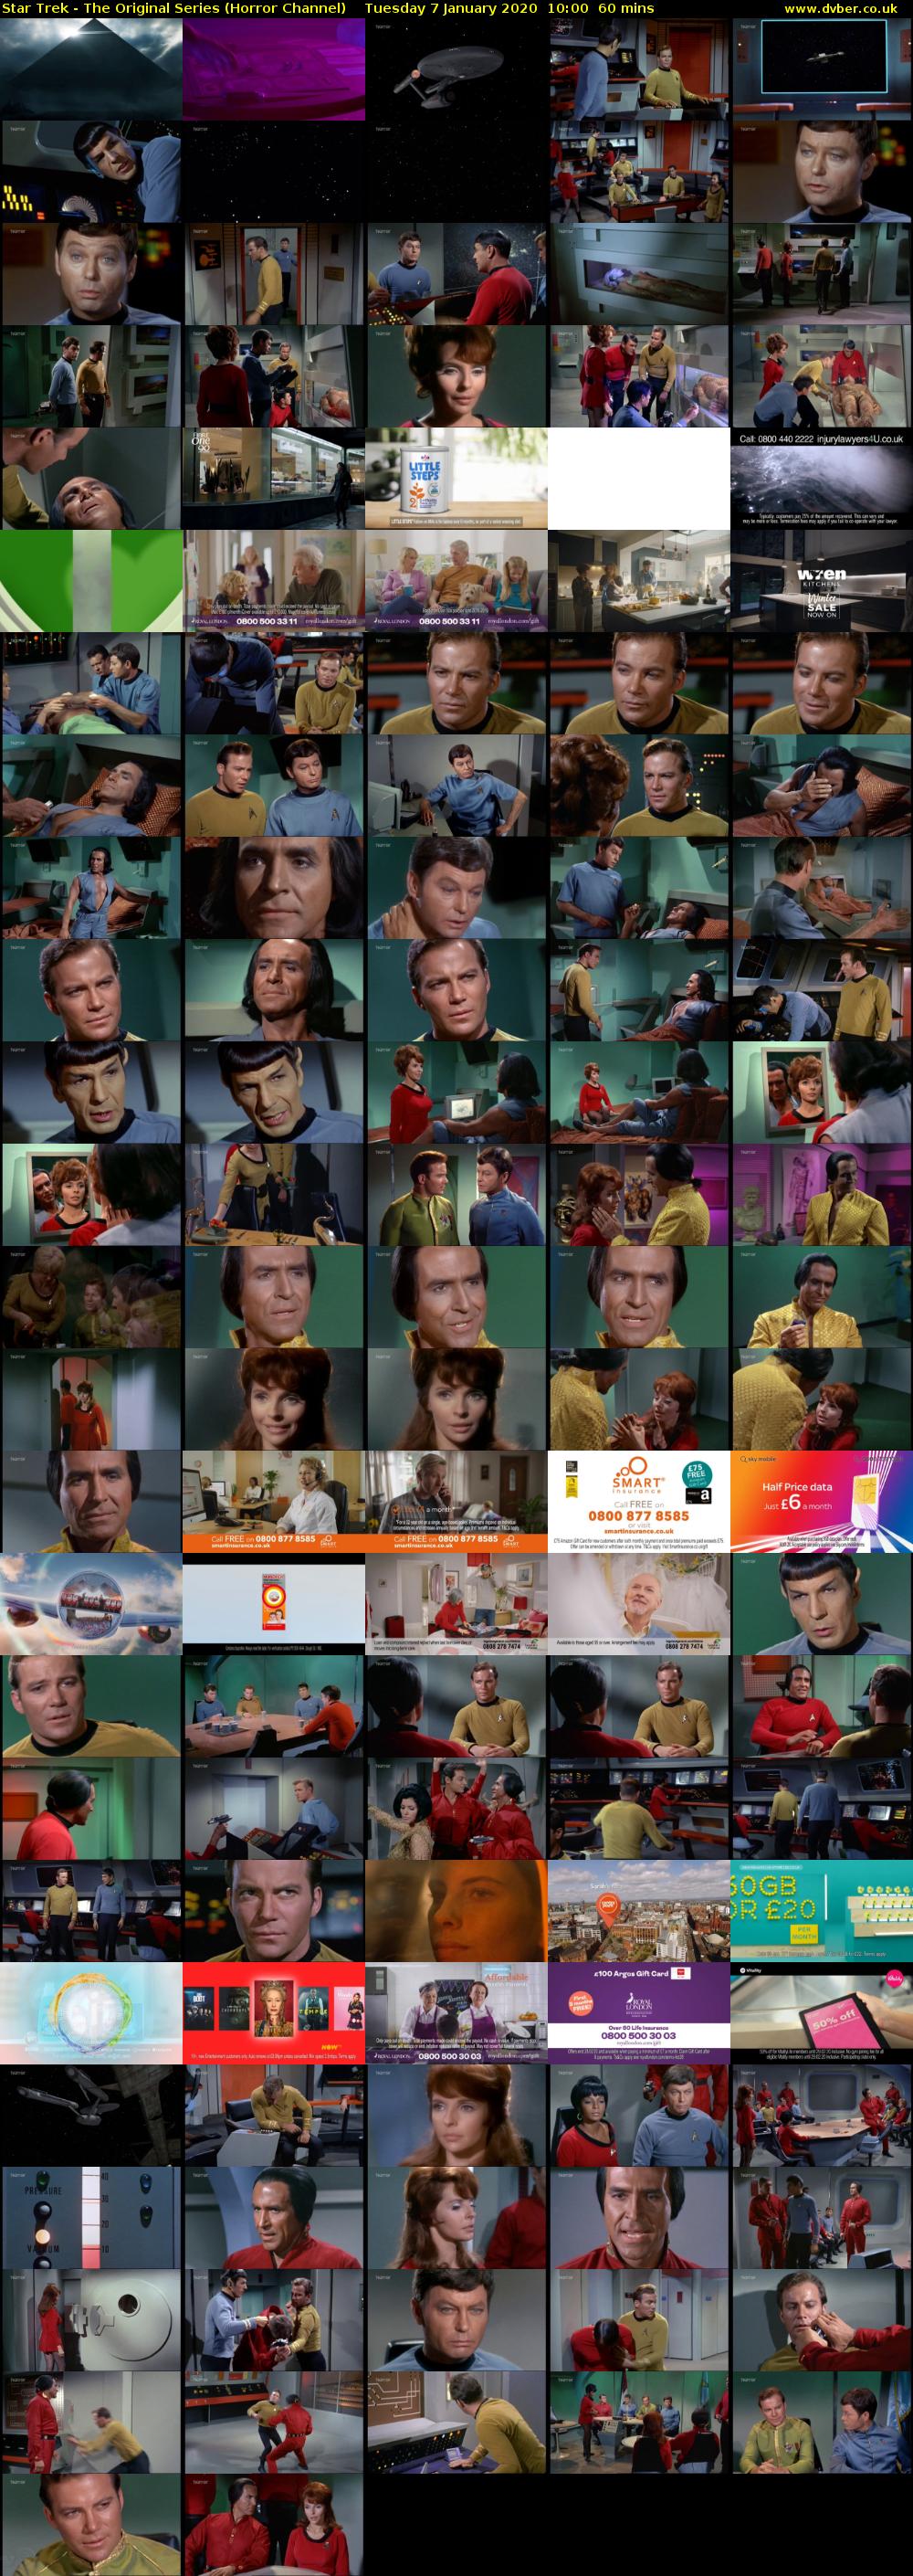 Star Trek - The Original Series (Horror Channel) Tuesday 7 January 2020 10:00 - 11:00